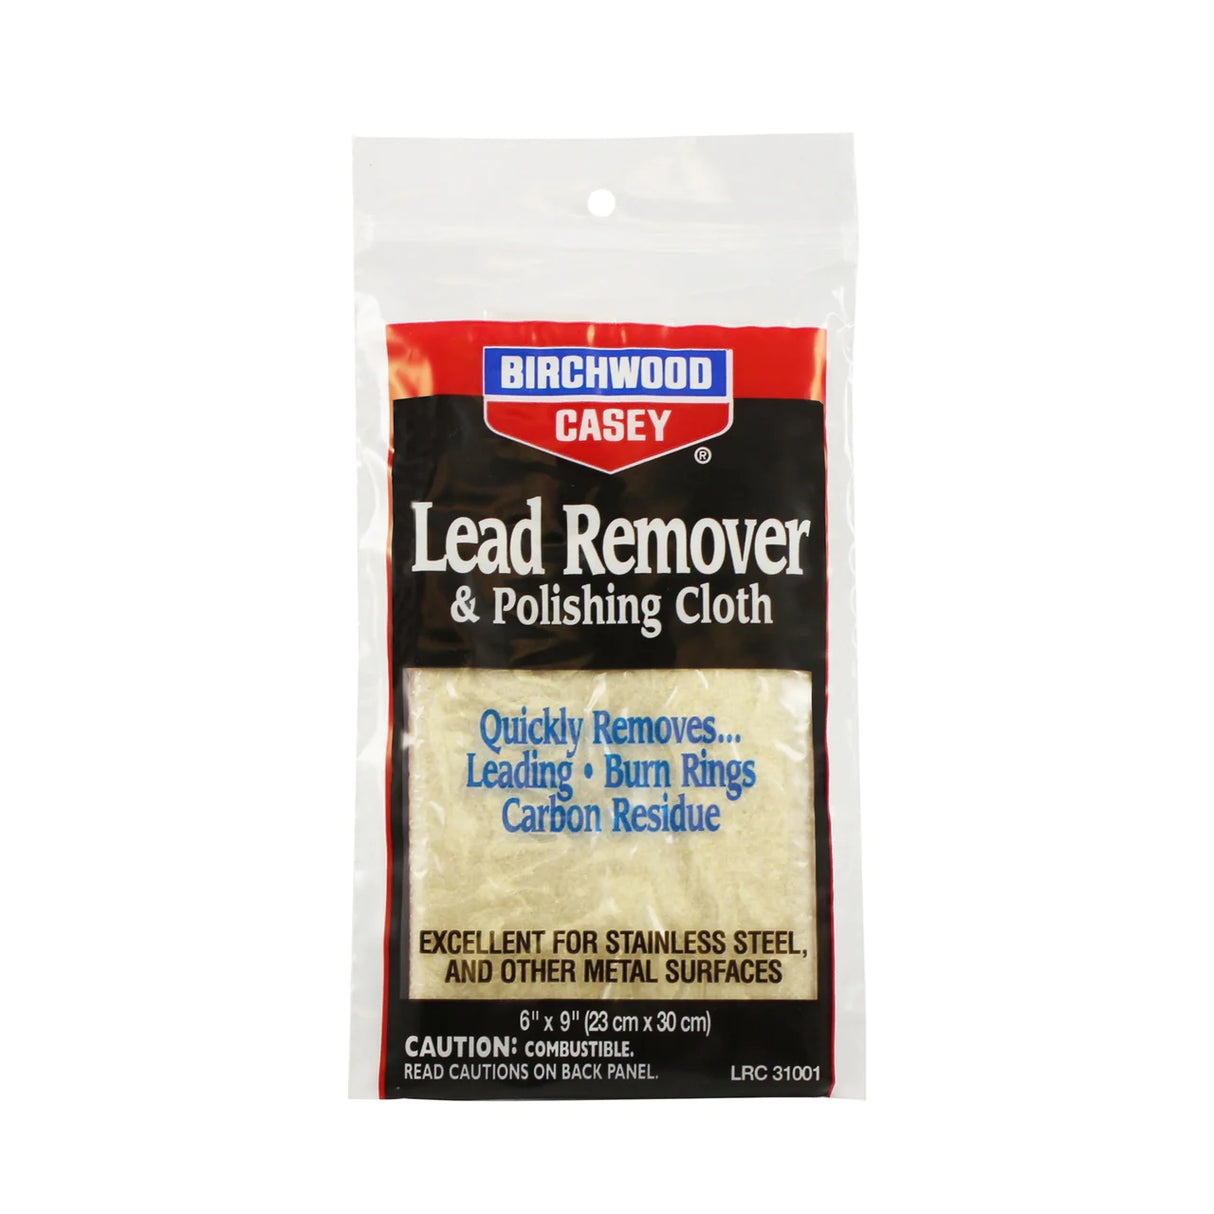 Birchwood Casey Lead Remover and Polishing Cloth